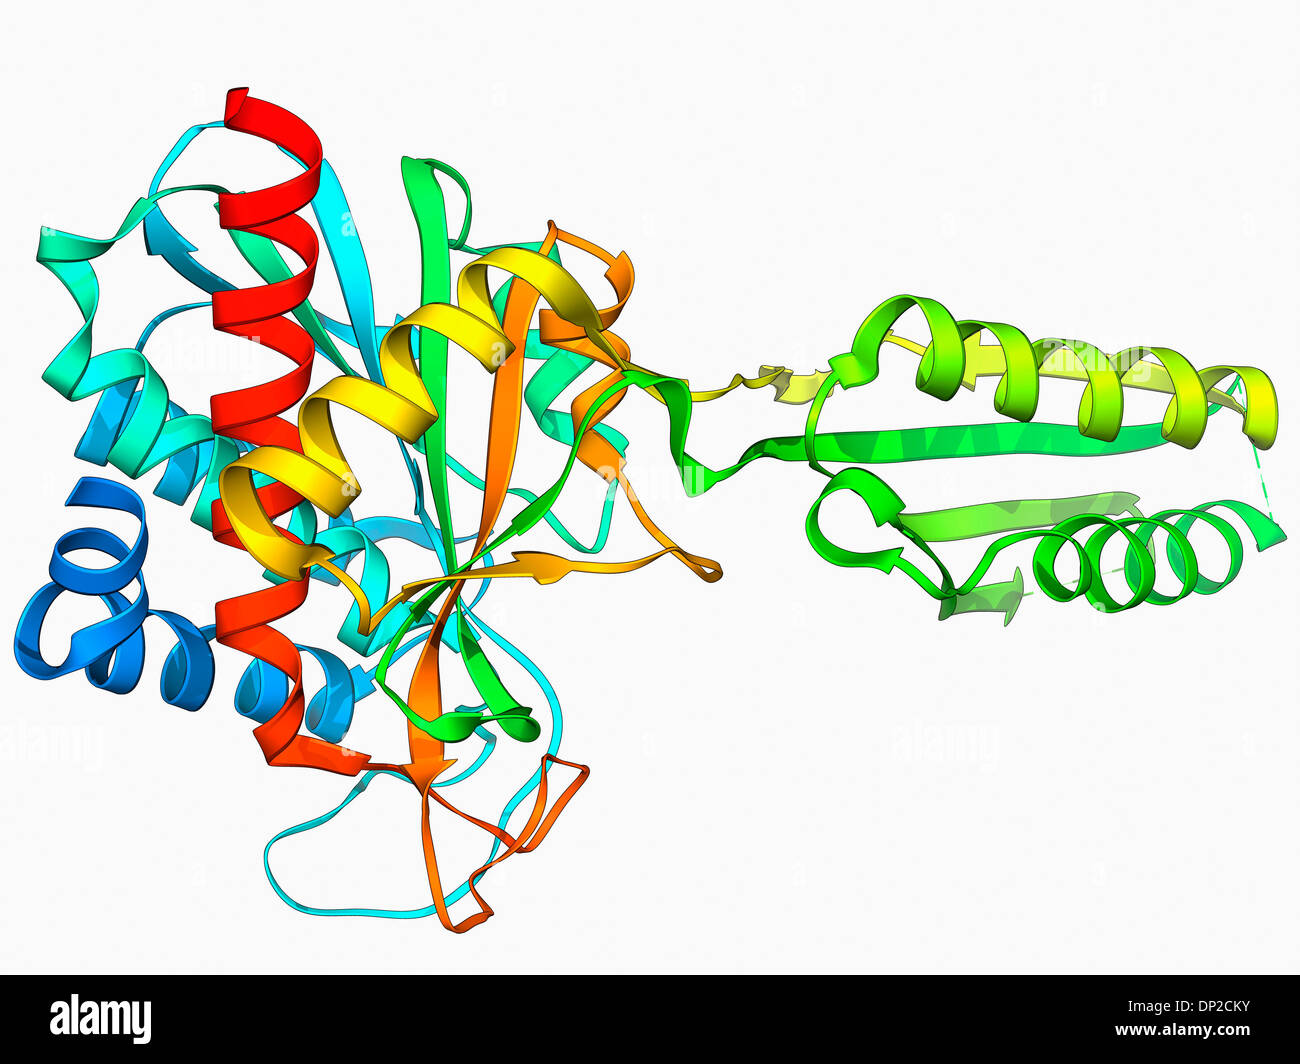 Plant hormone regulator, molecular model Stock Photo